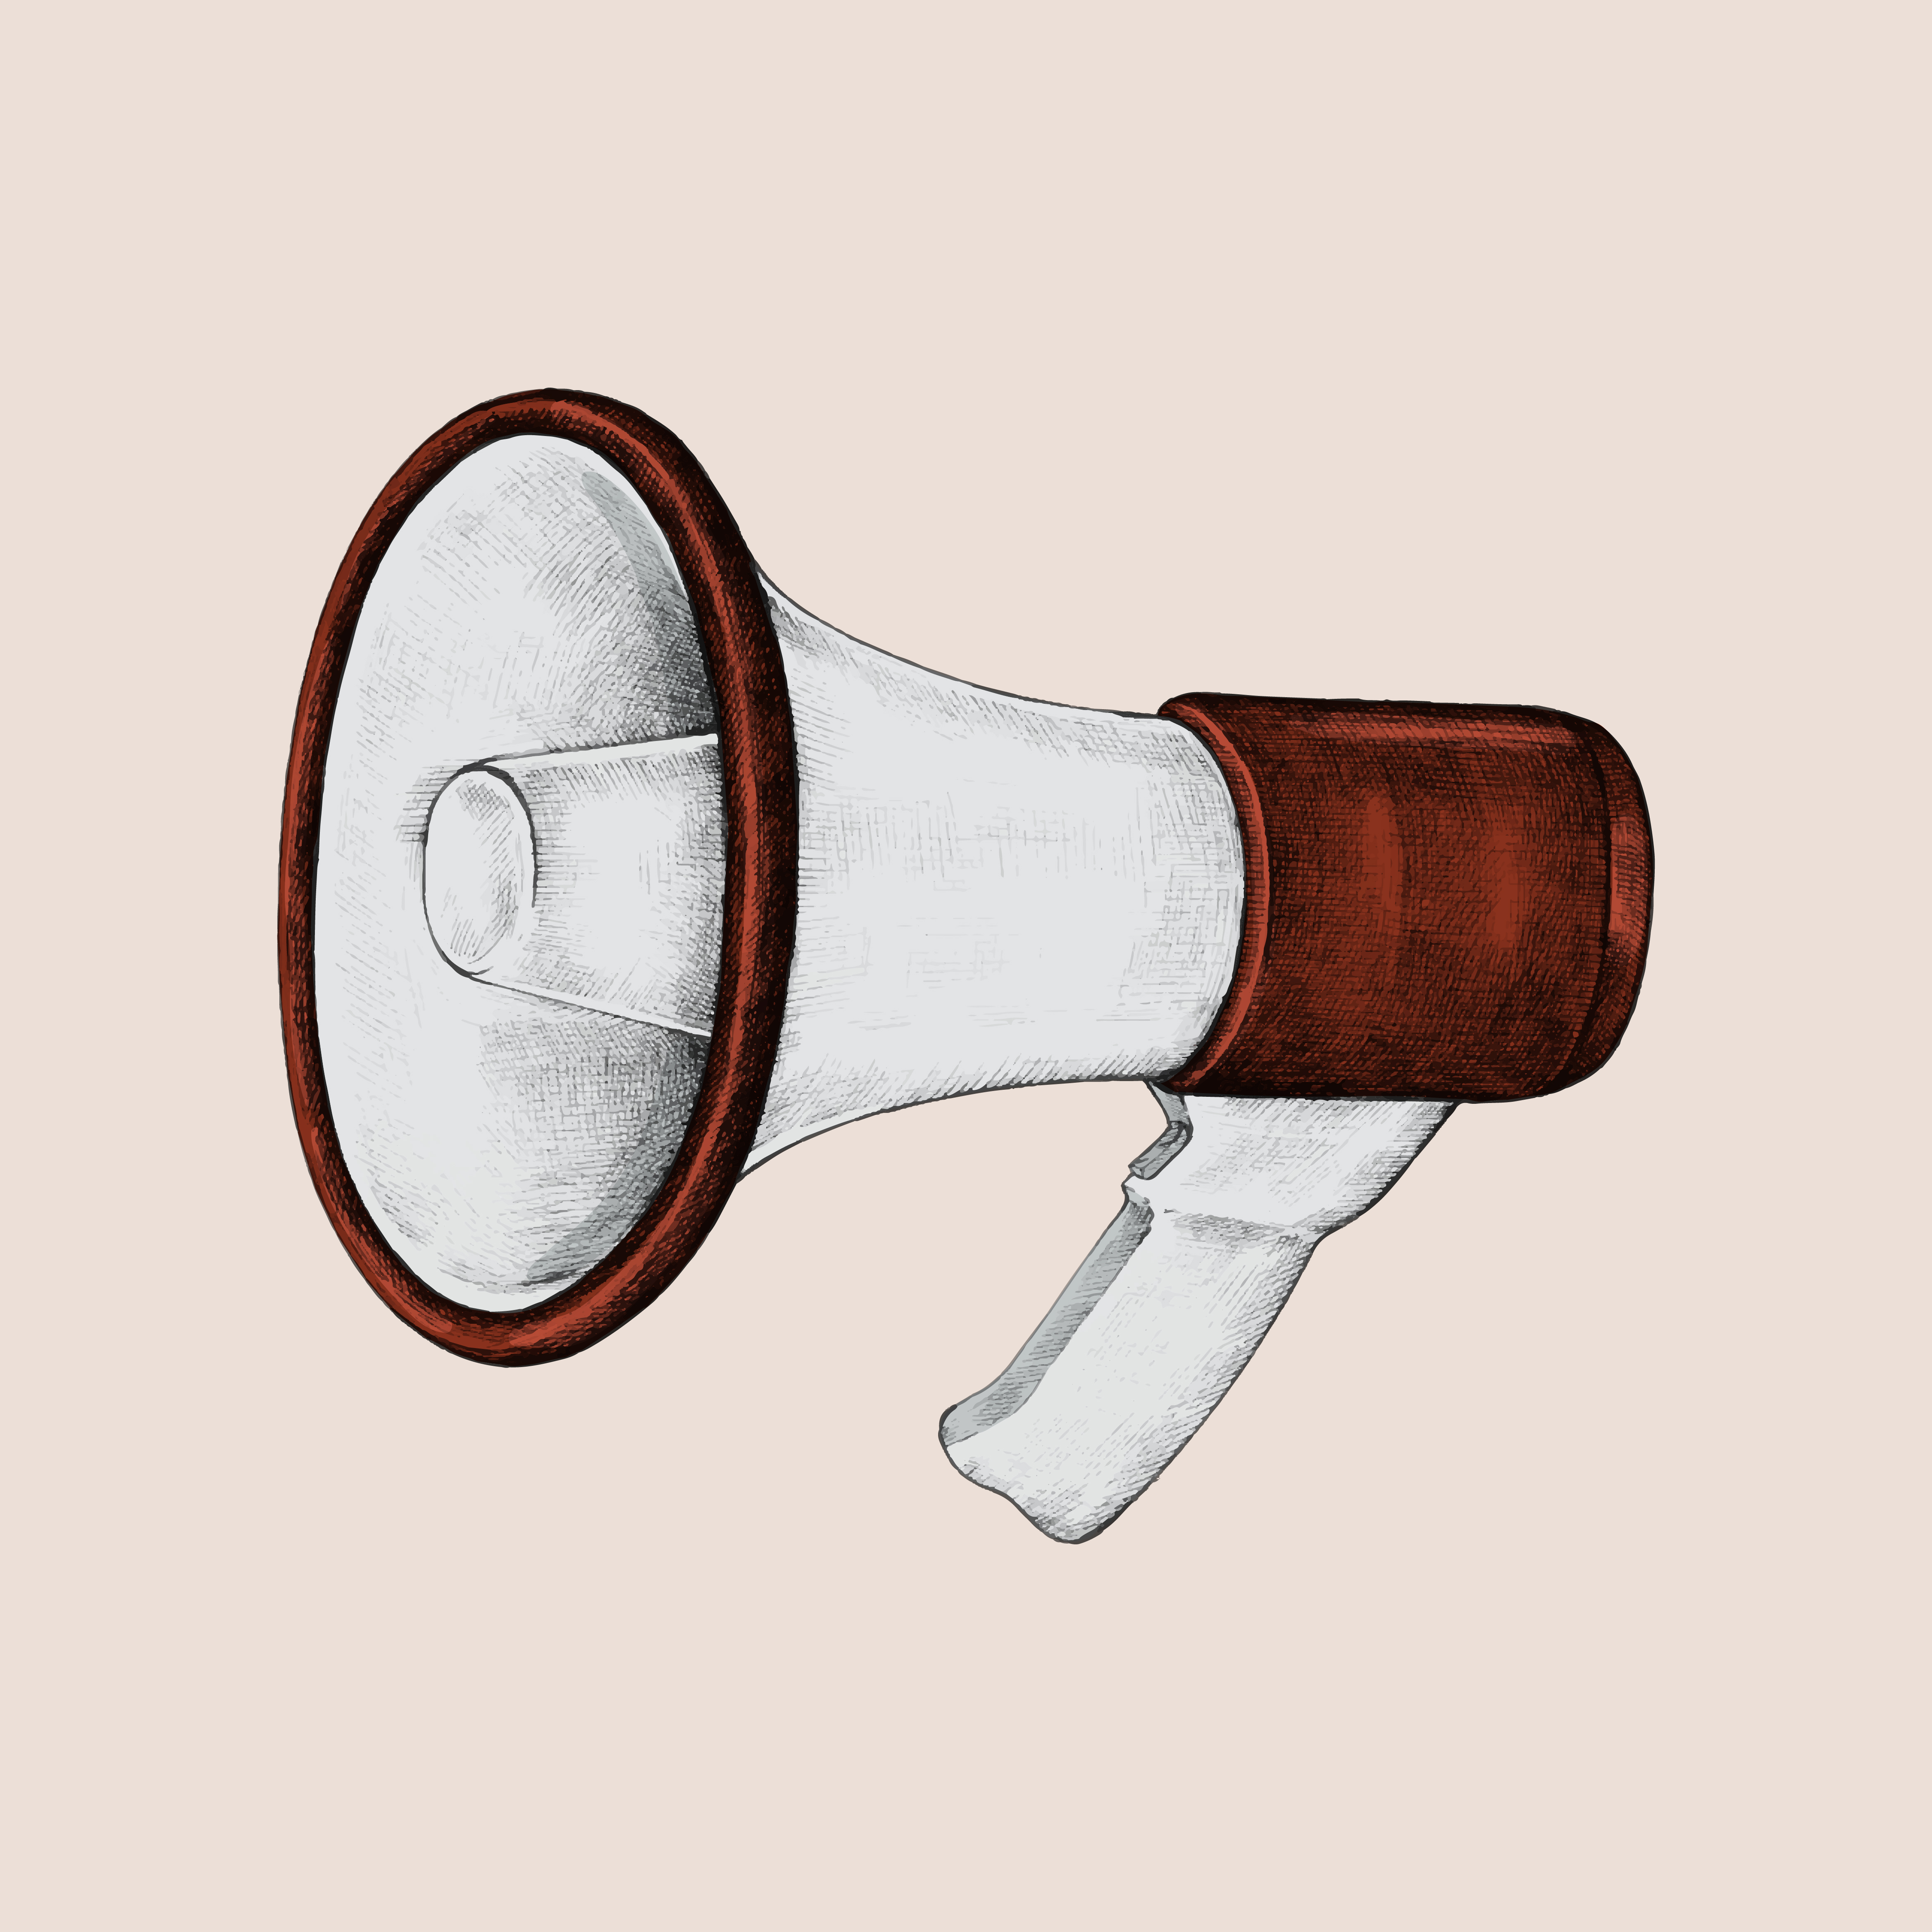 Hand drawn red megaphone illustration Download Free Vectors Clipart Graphics & Vector Art